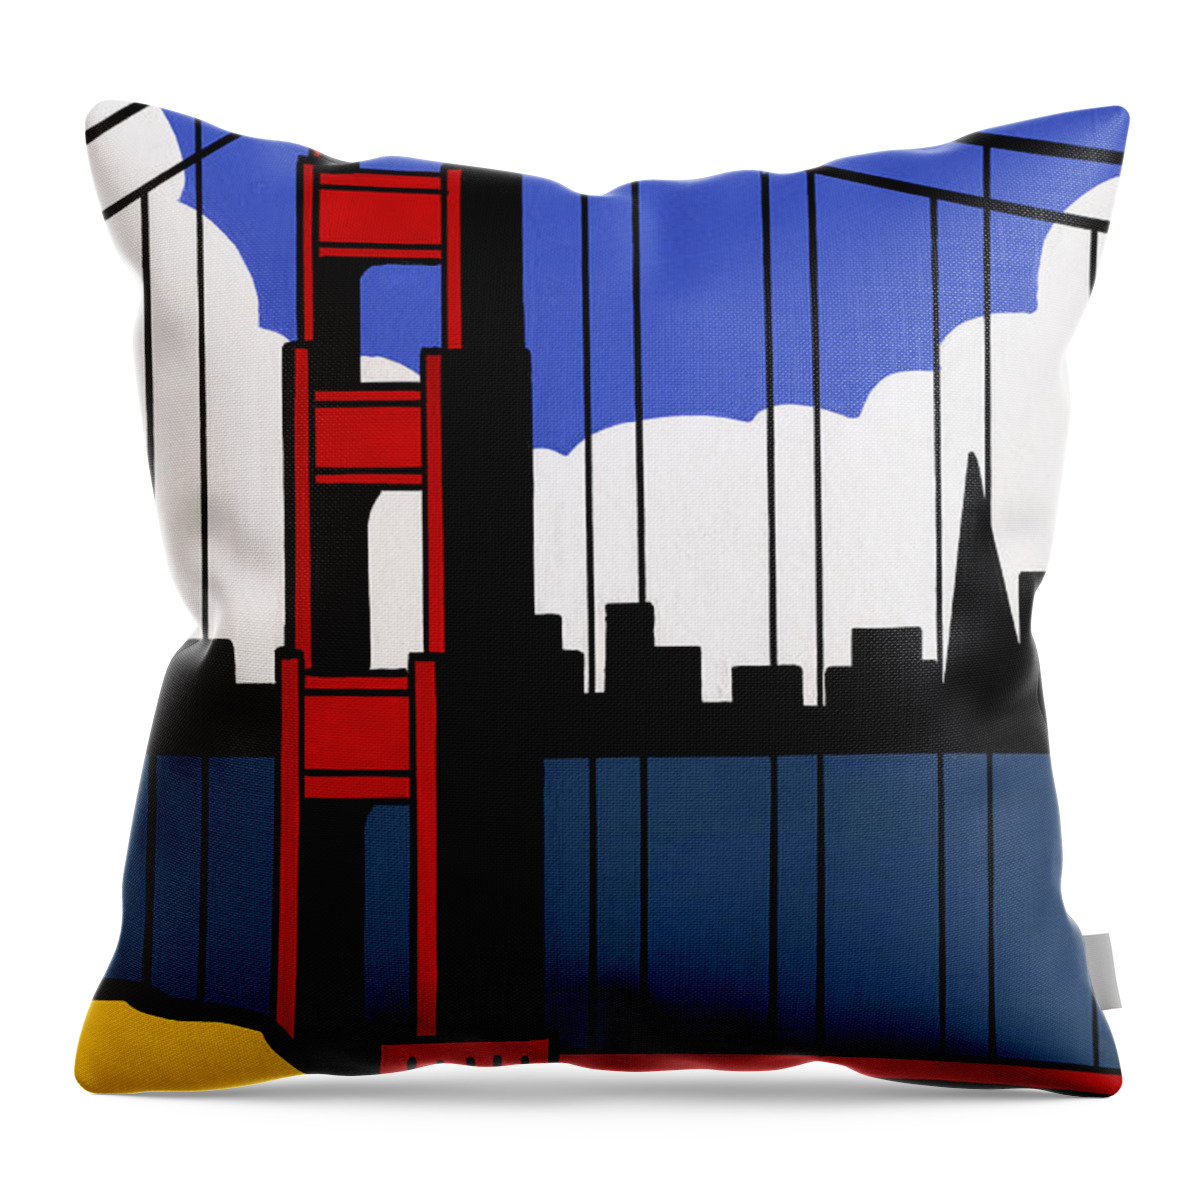 Gouache Throw Pillow featuring the digital art Golden Gate Bridge, San Francisco by Matt Olson